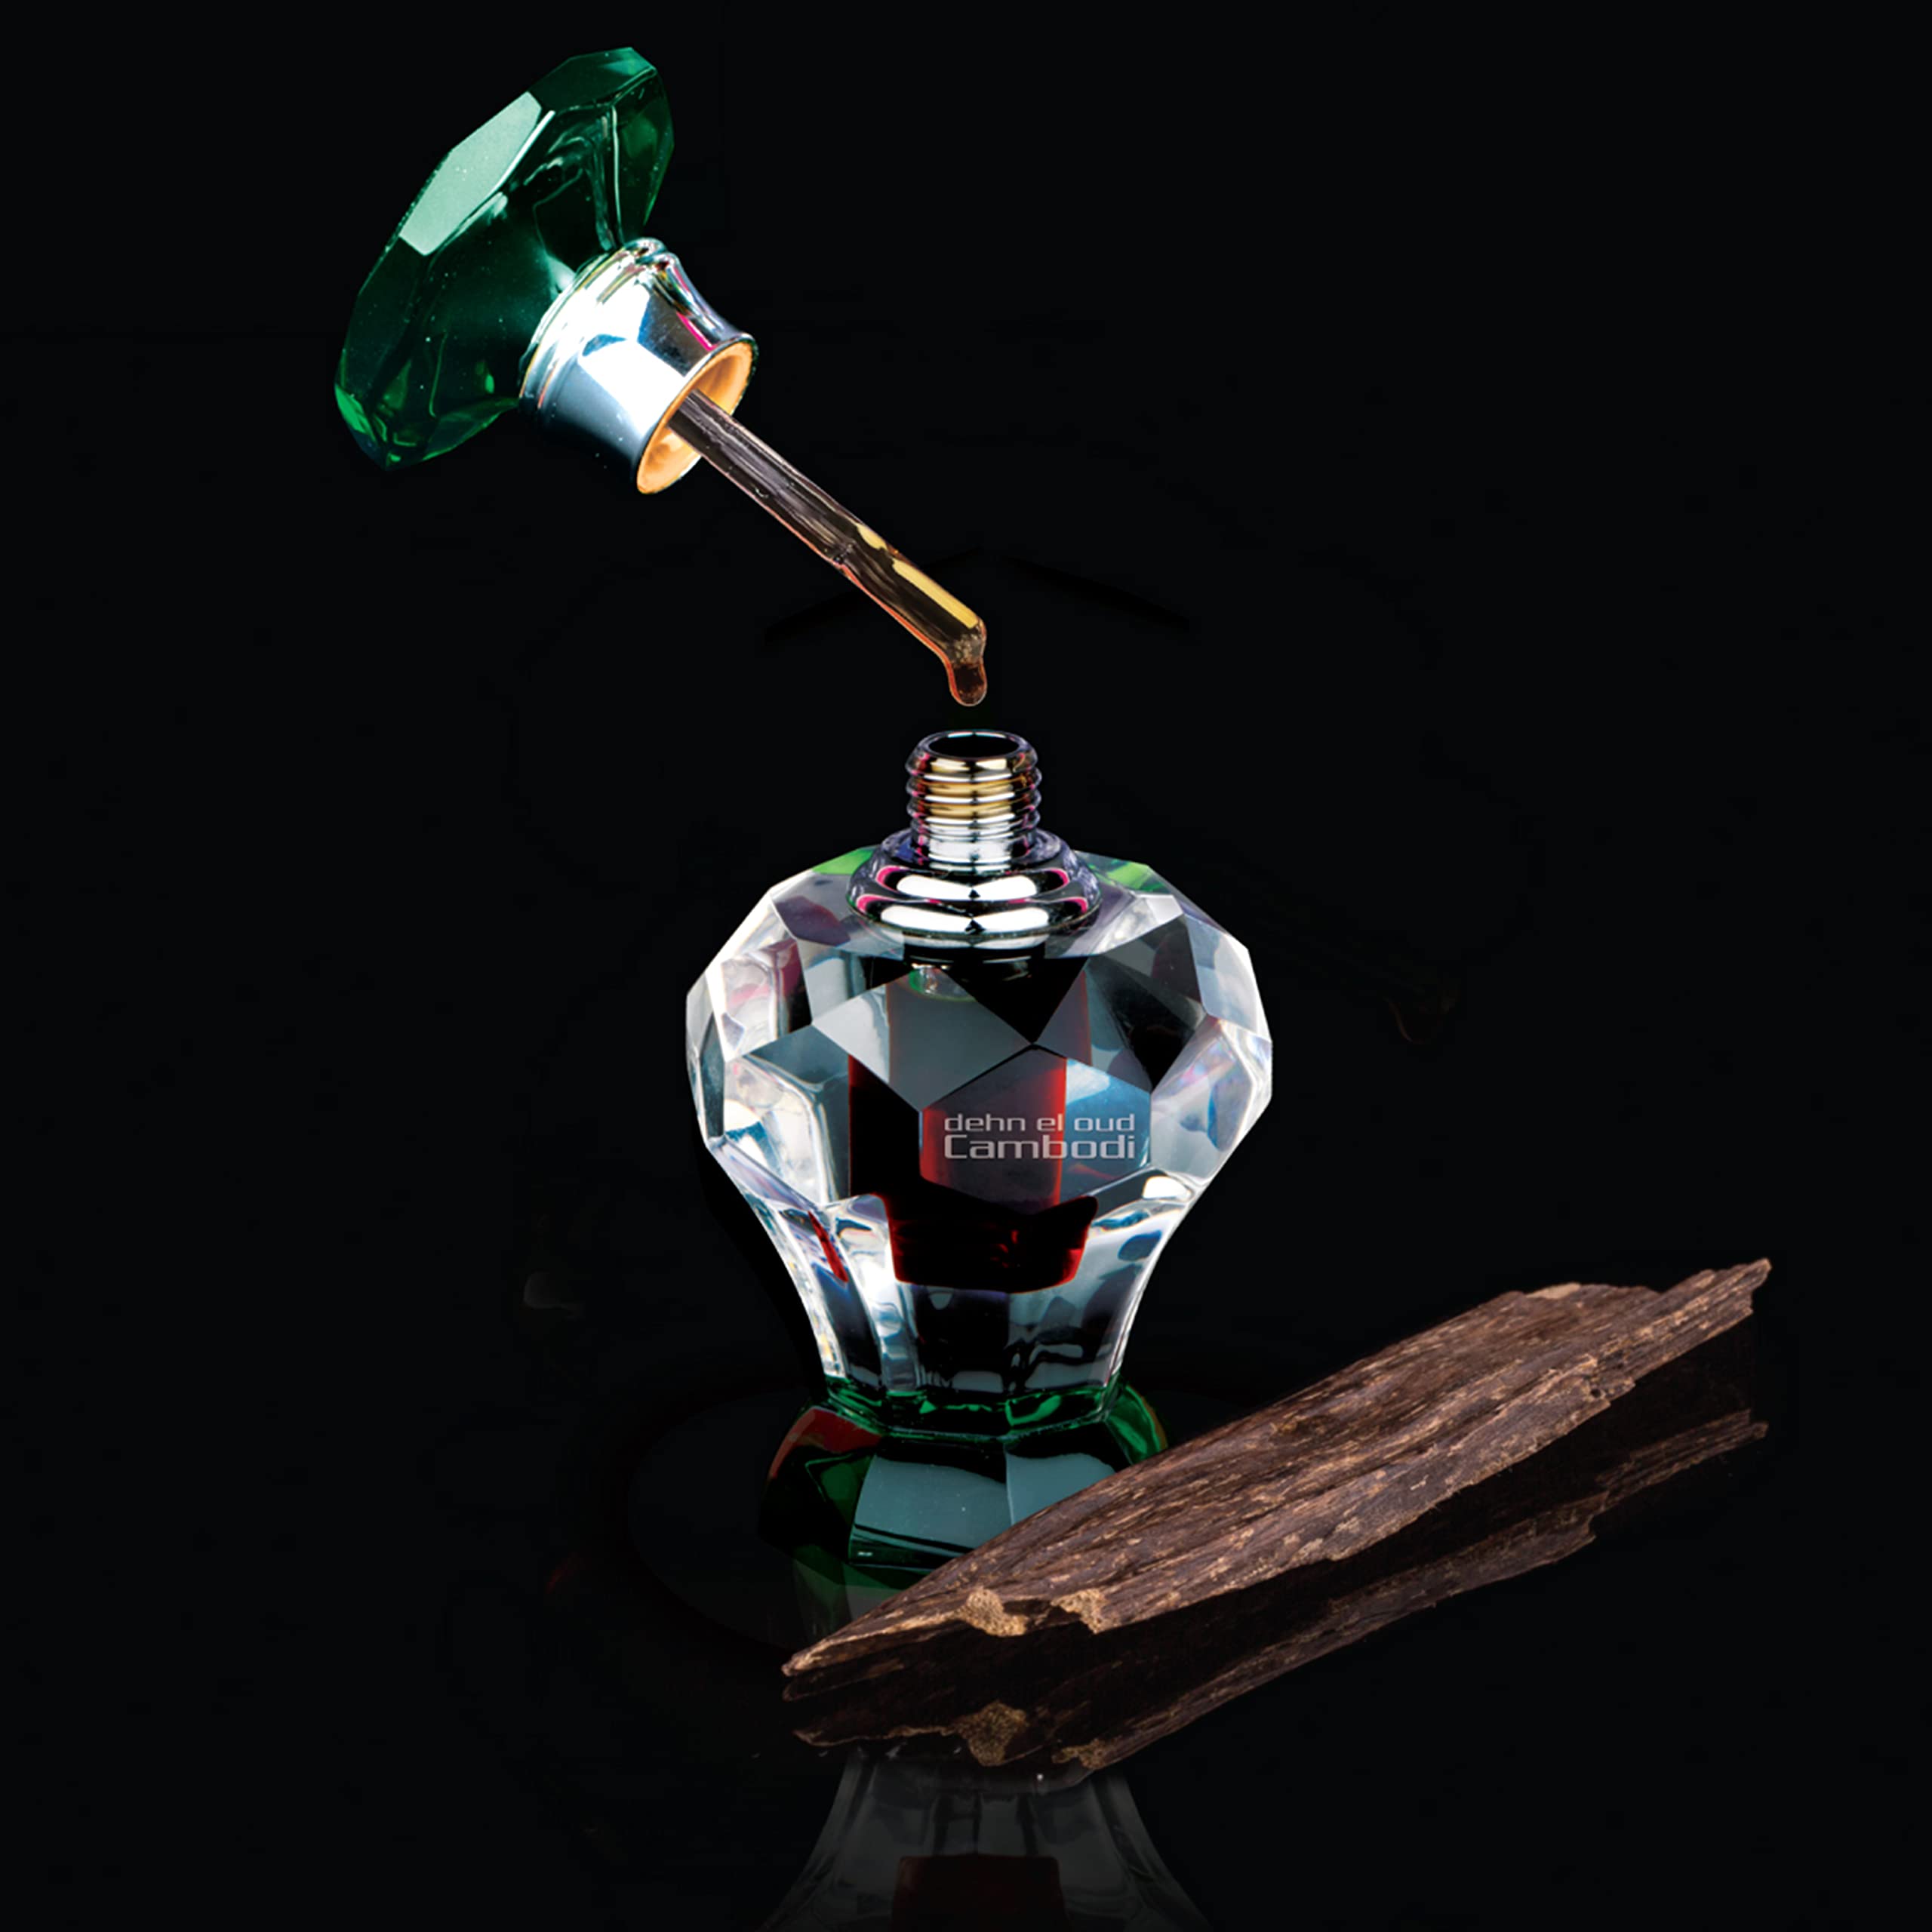 Swiss Arabian Dehn El Oud Cambodi - Luxury Products From Dubai - Lasting, Addictive Personal Perfume Oil Fragrance - Seductive Signature Aroma - The Luxurious Scent Of Arabia - 0.1 Oz